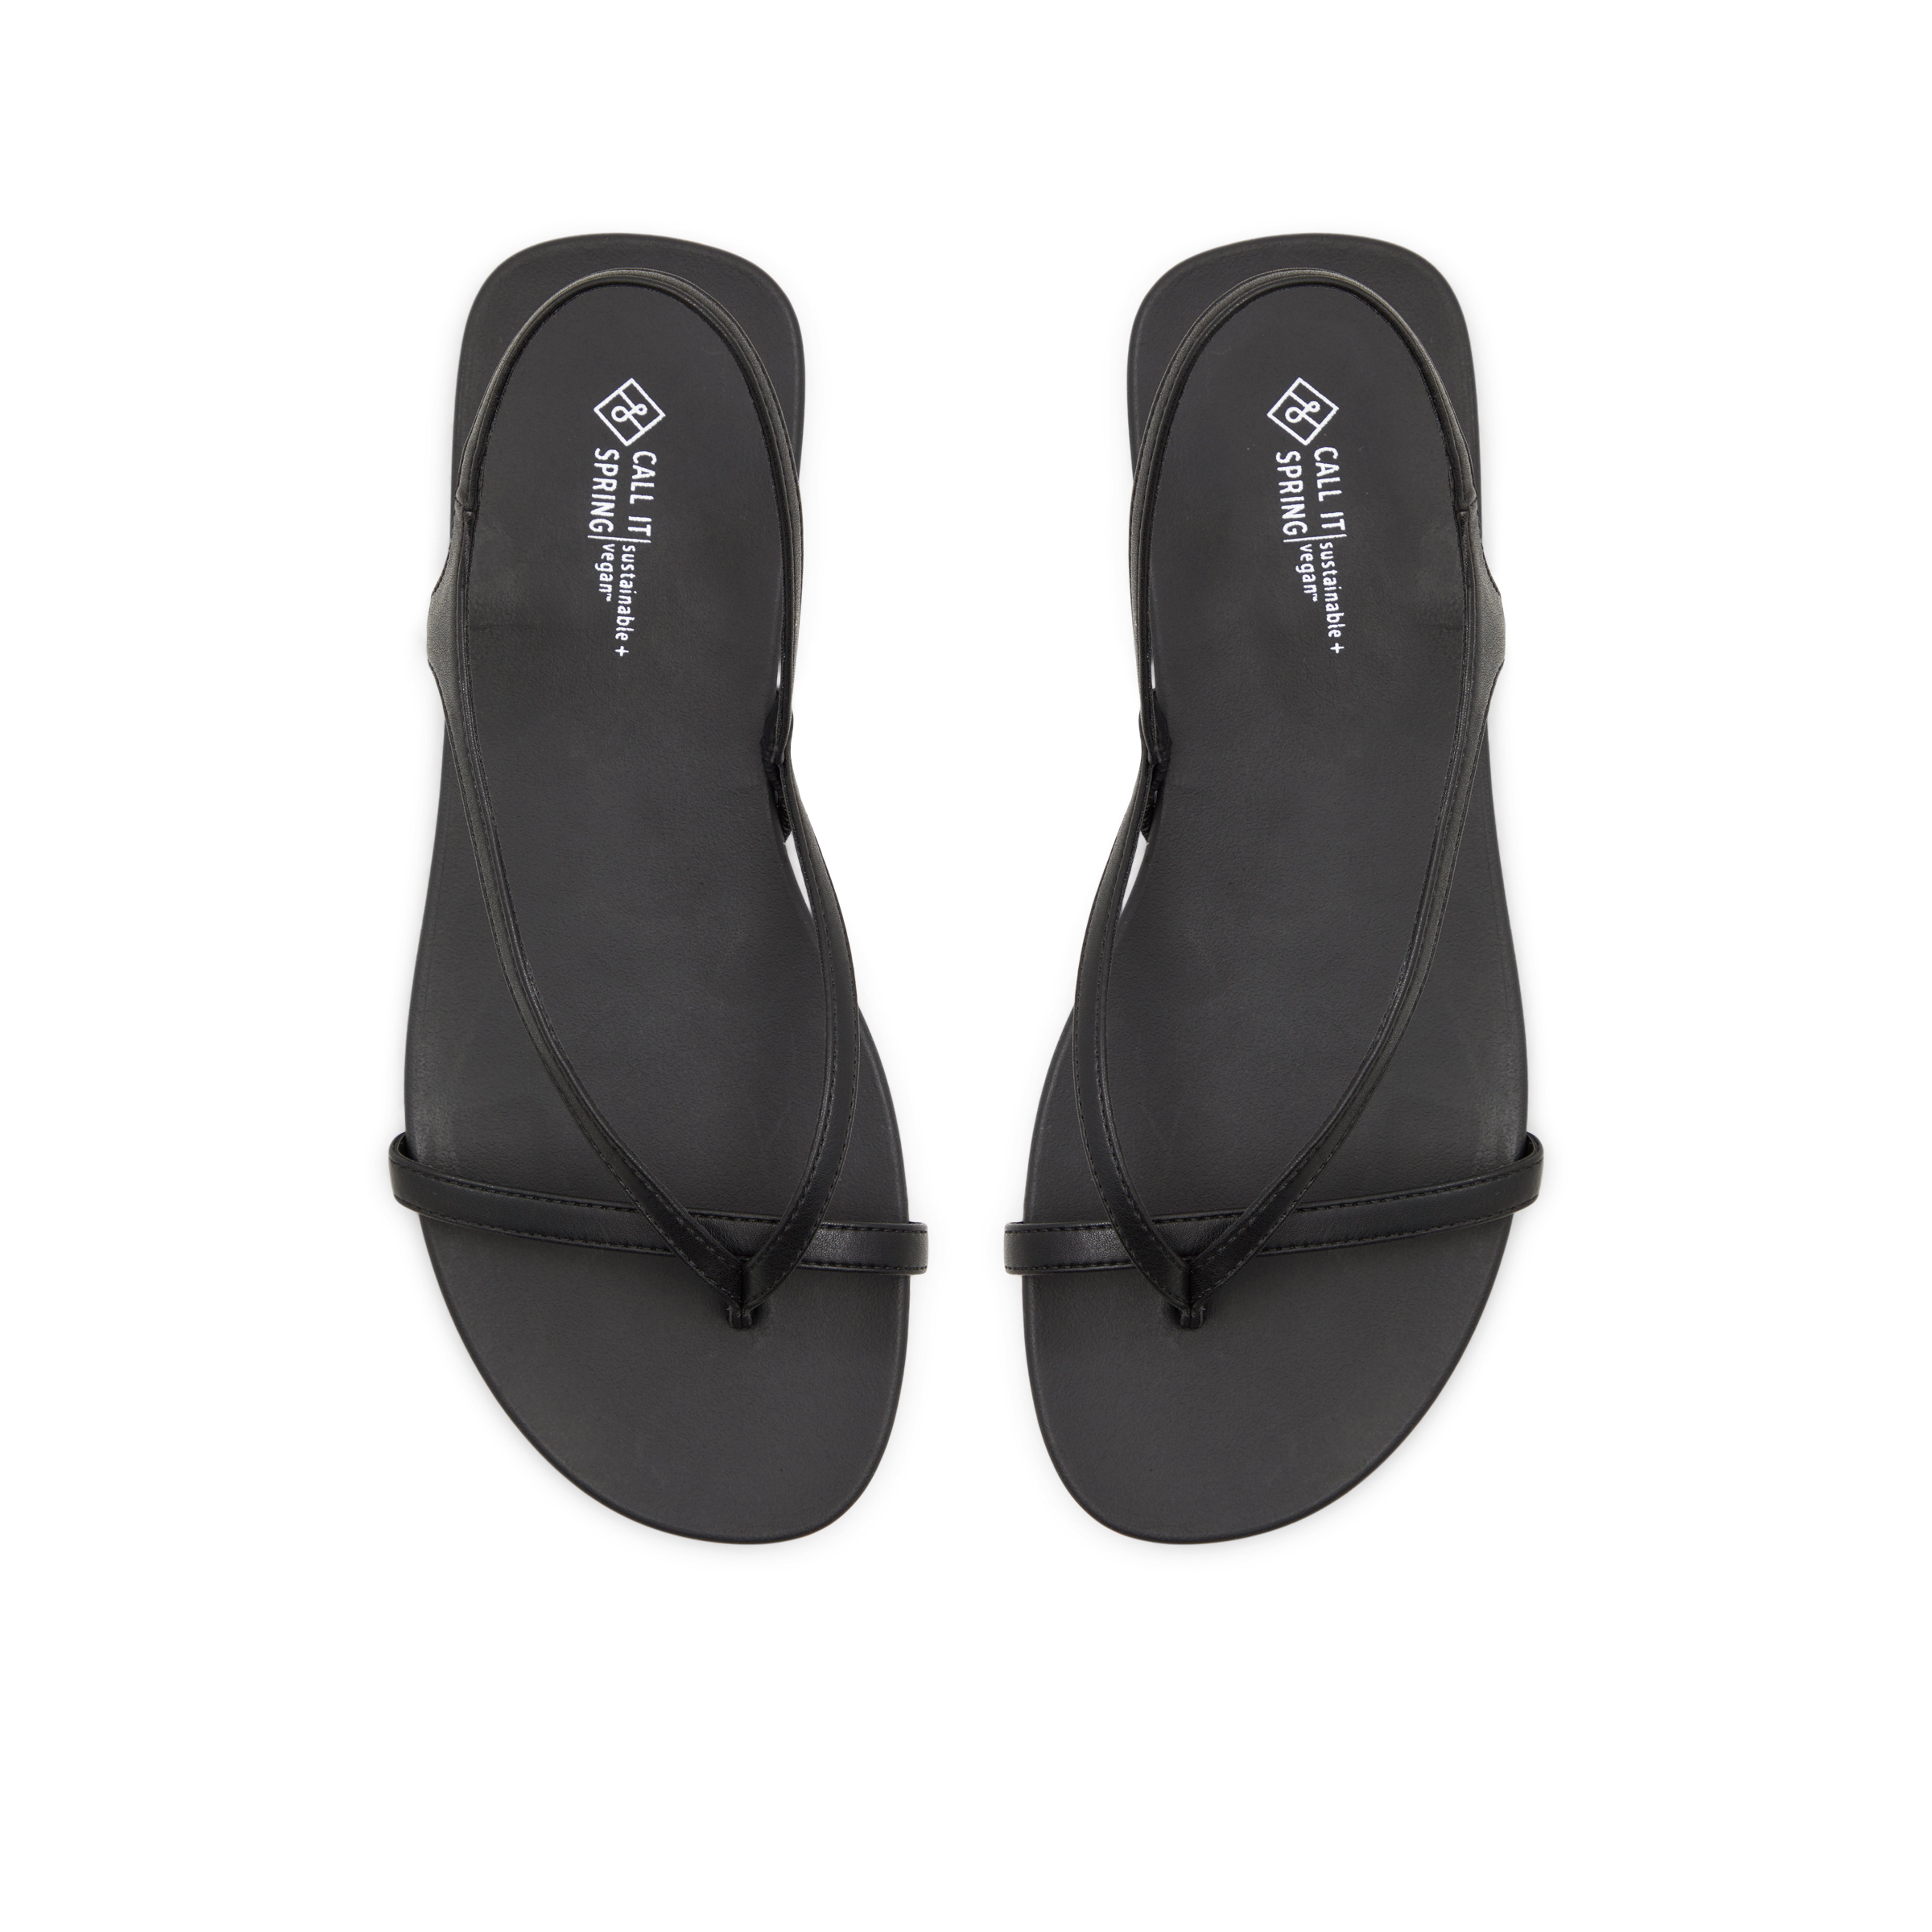 Montebello Women's Black Flat Sandals